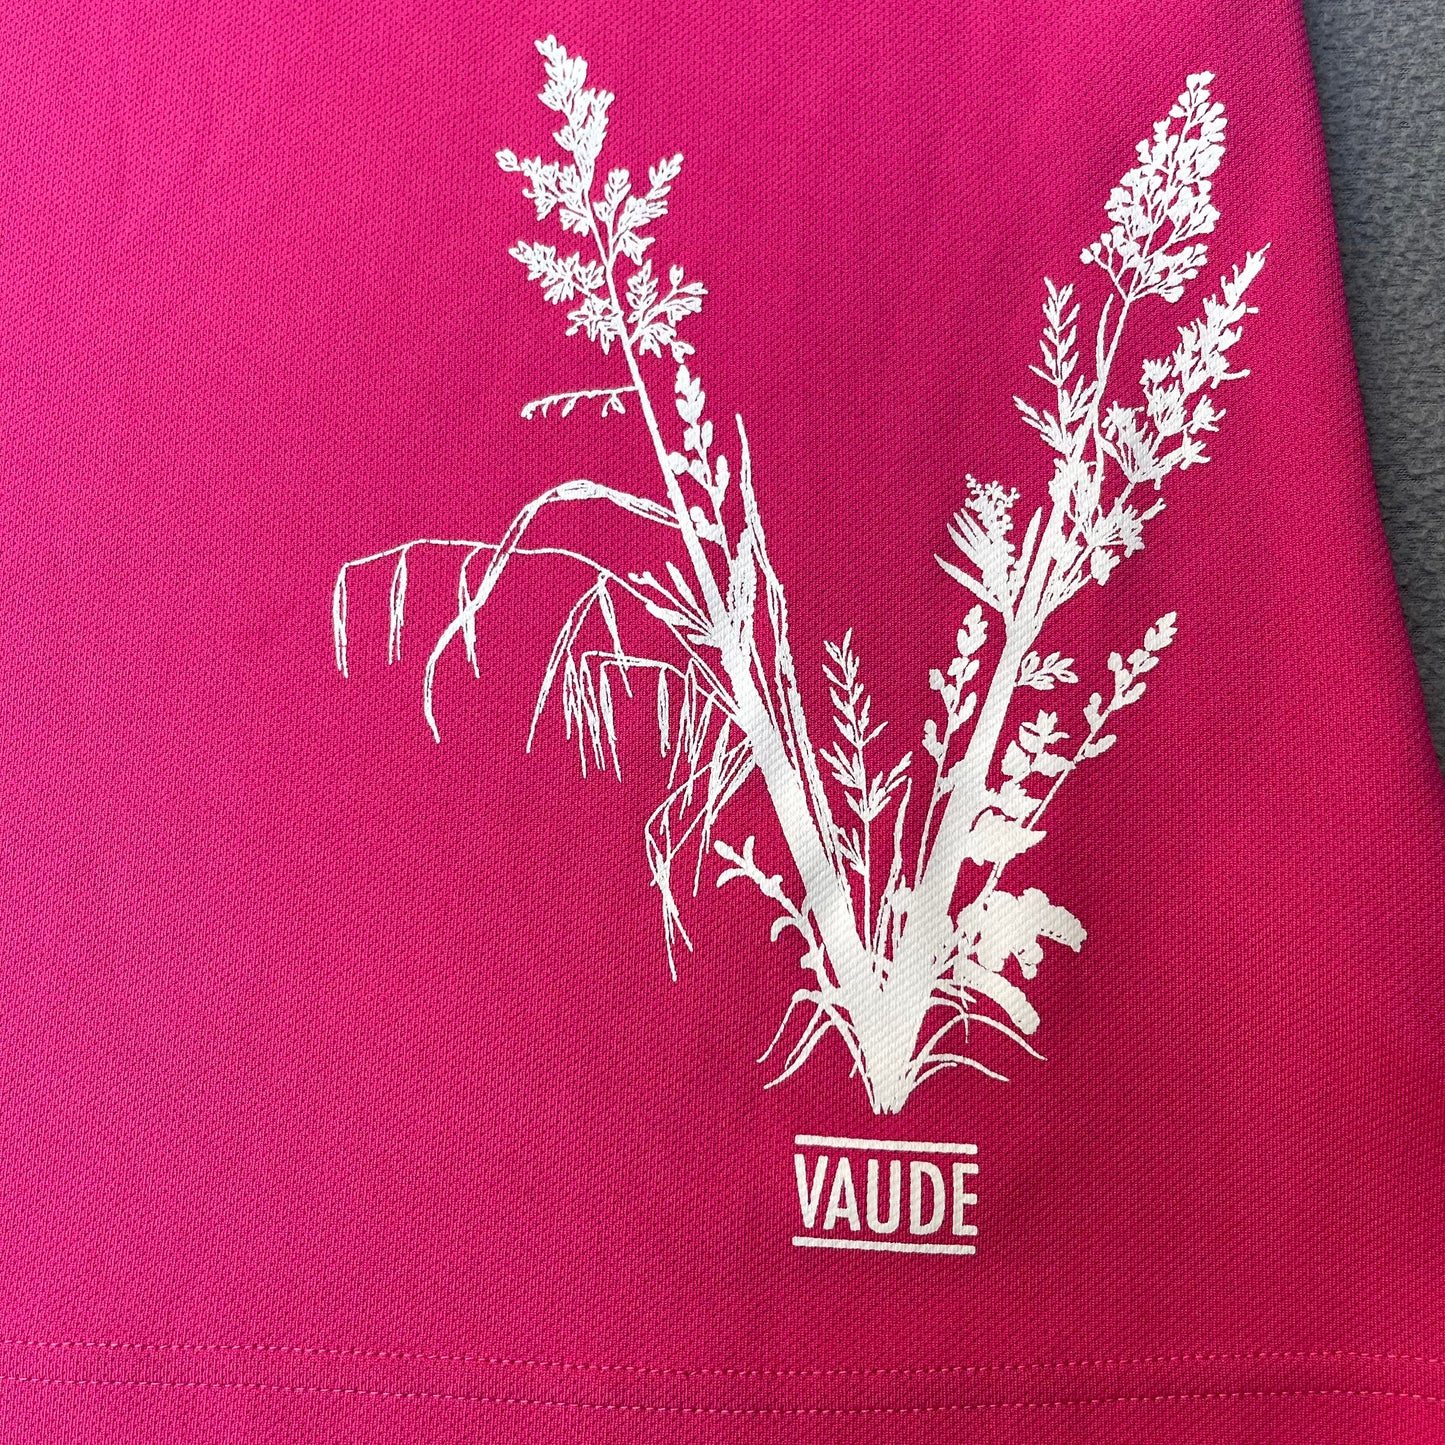 T-Shirt von Vaude Damen XS pink neu